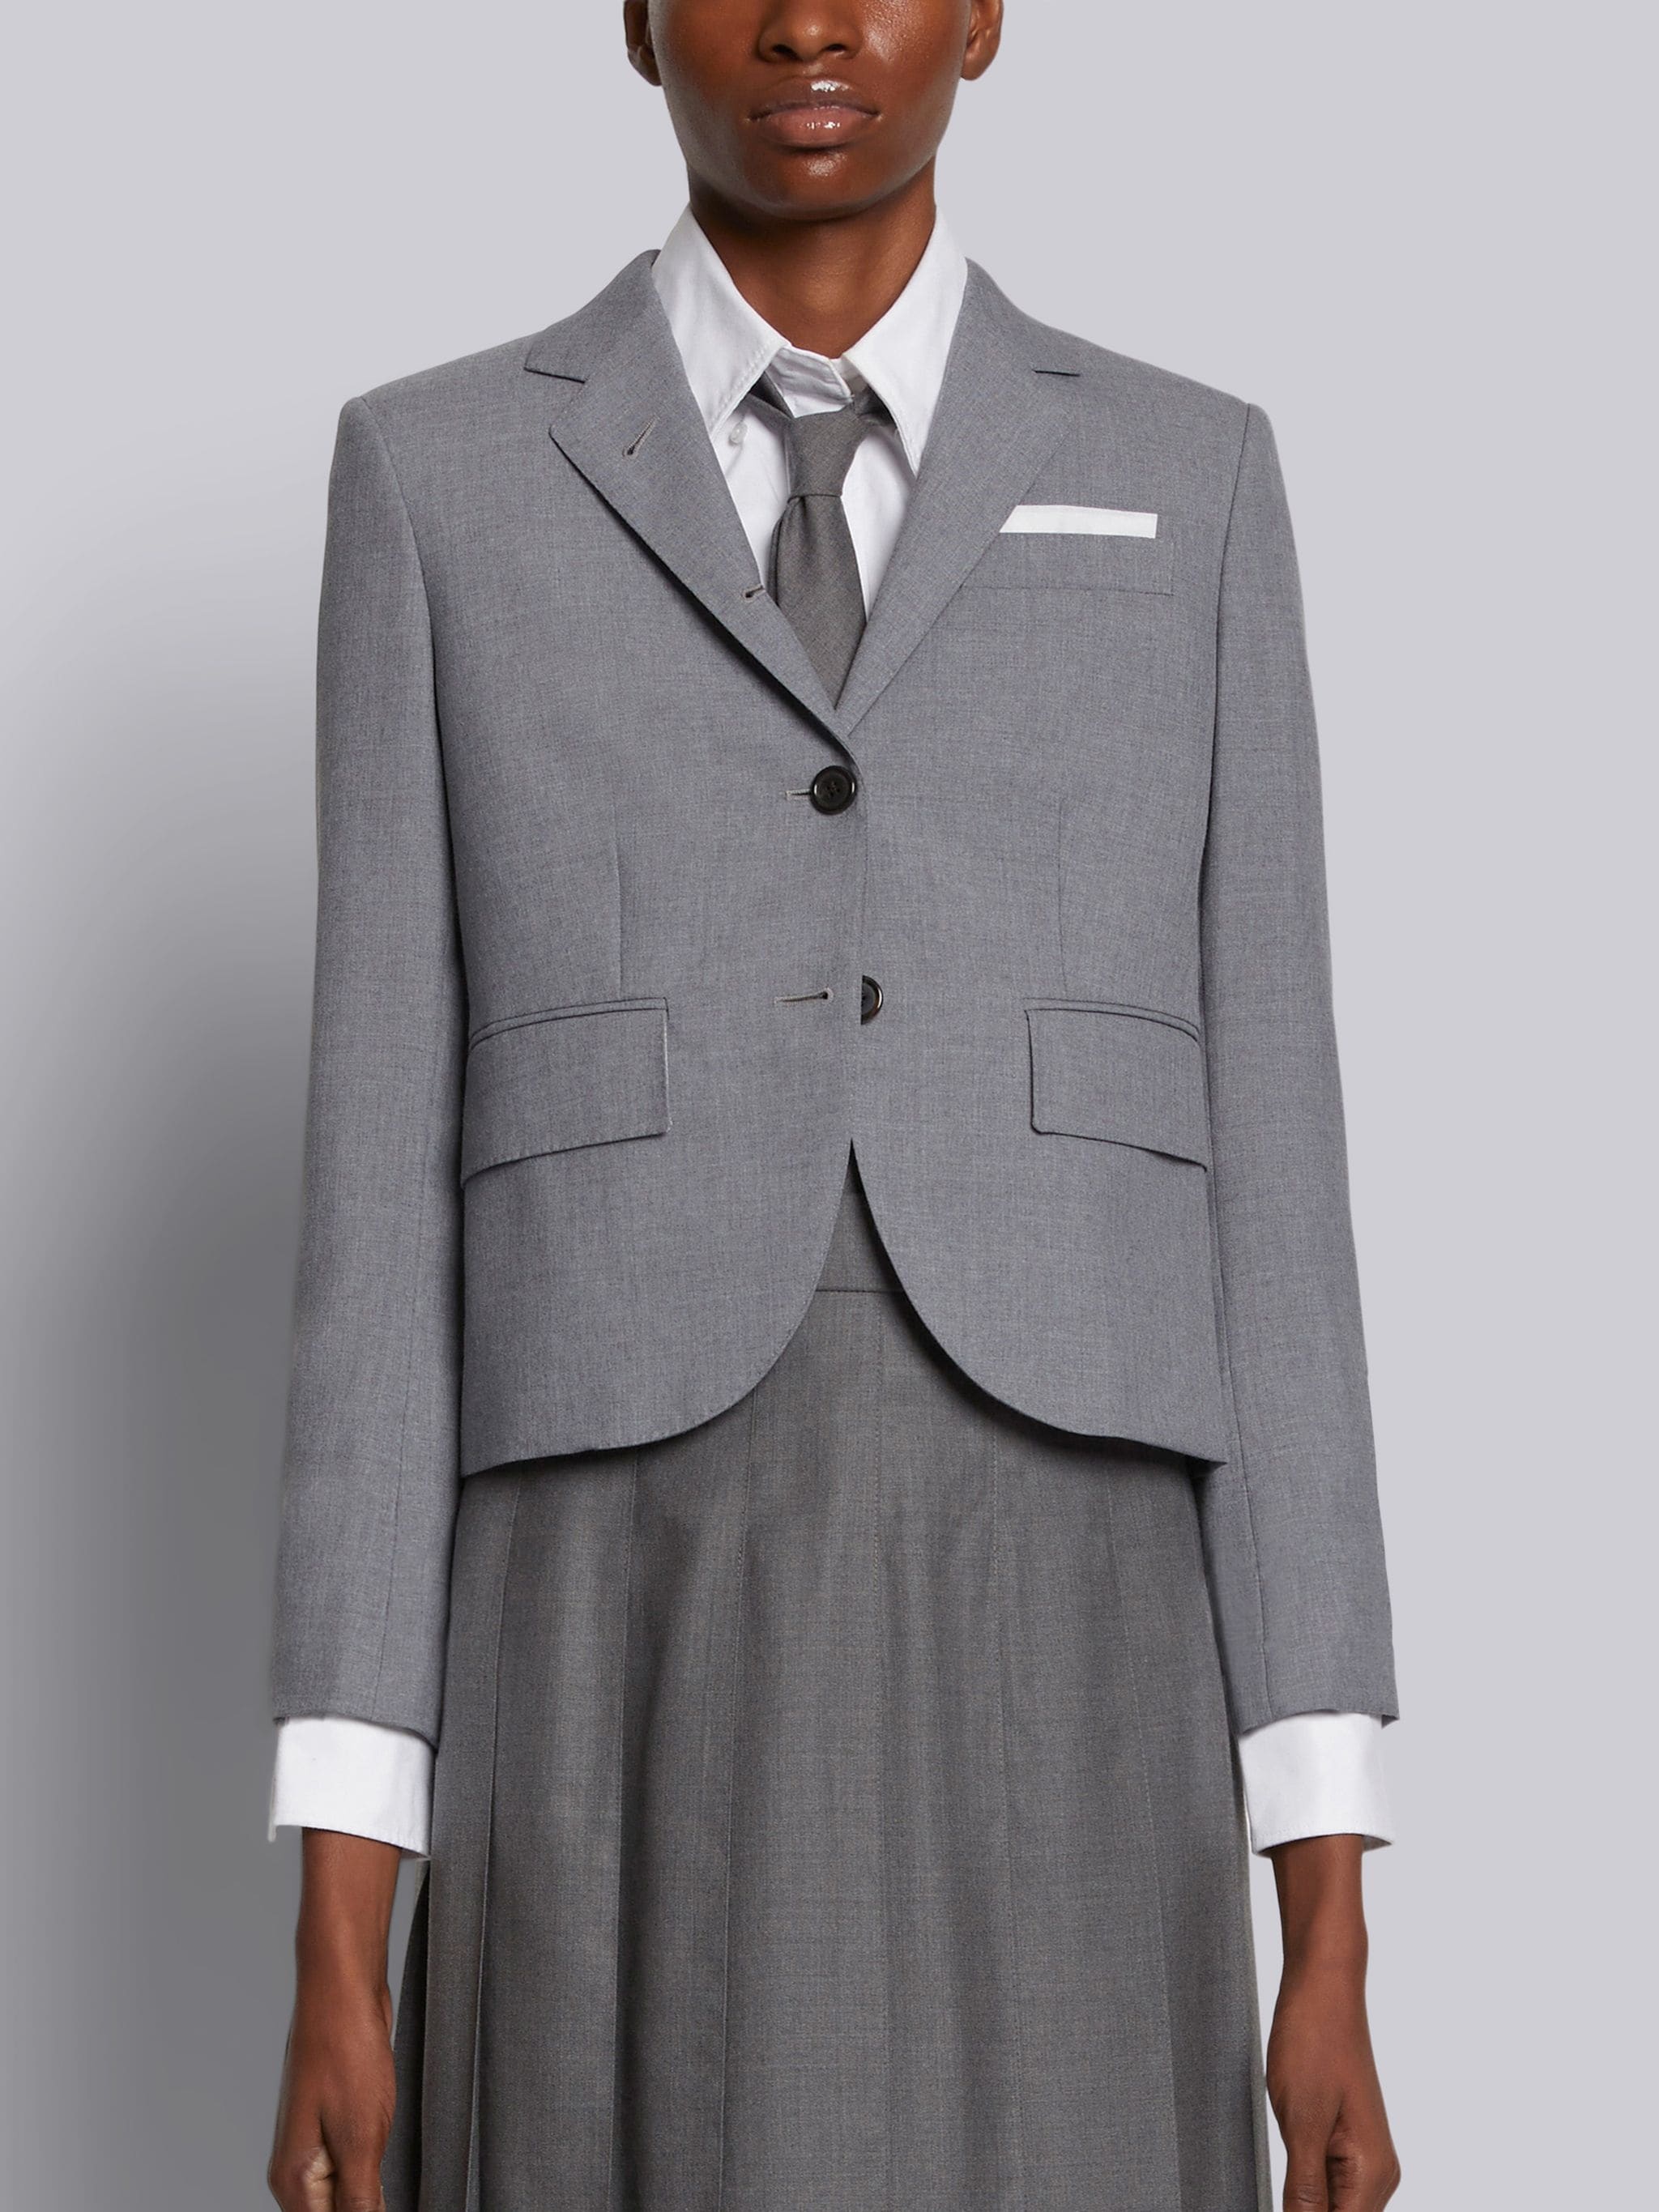 Medium Grey School Uniform Plain Weave High Armhole Single Breasted Sport Coat - 1